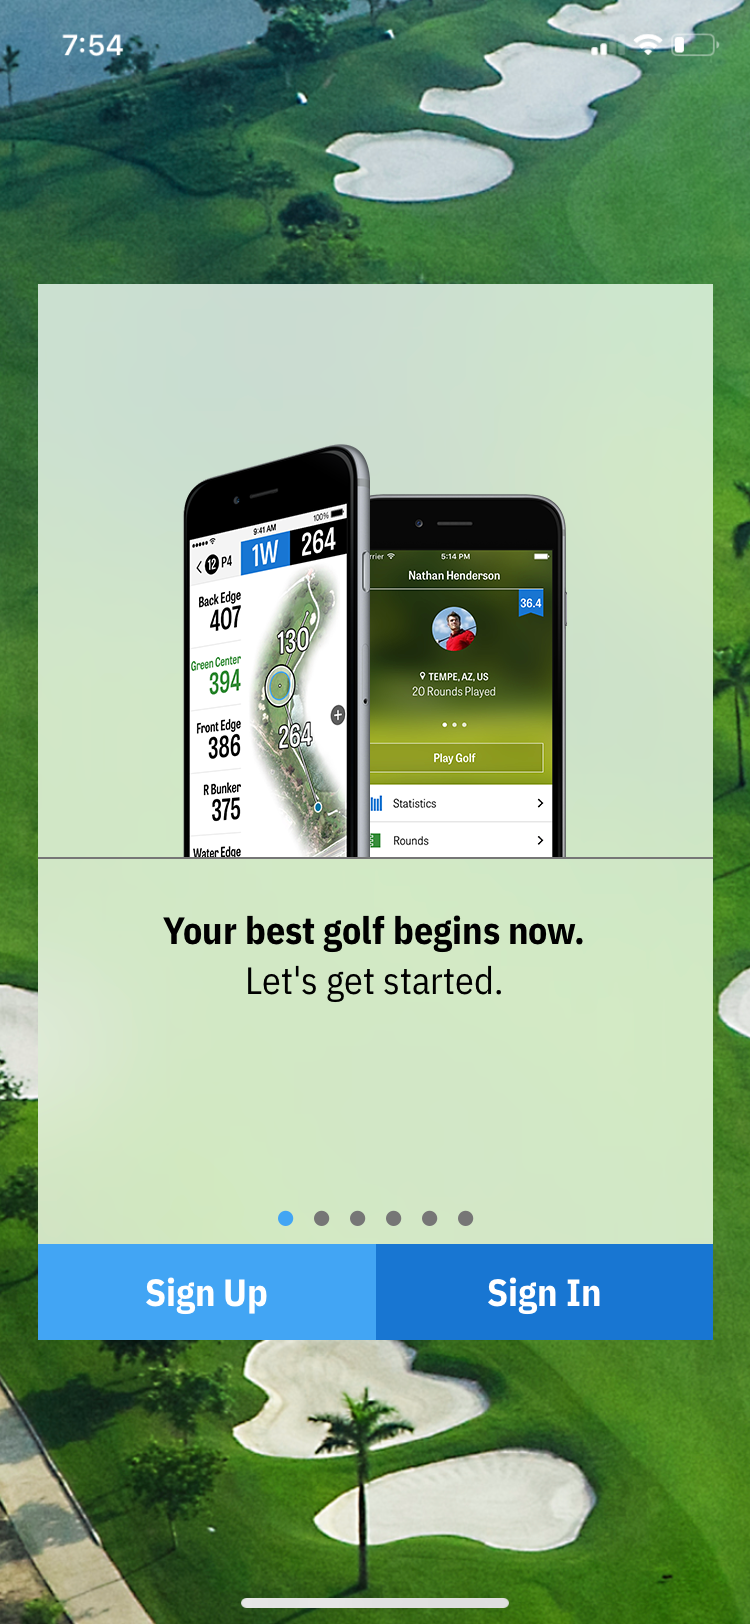 Golfshot login page